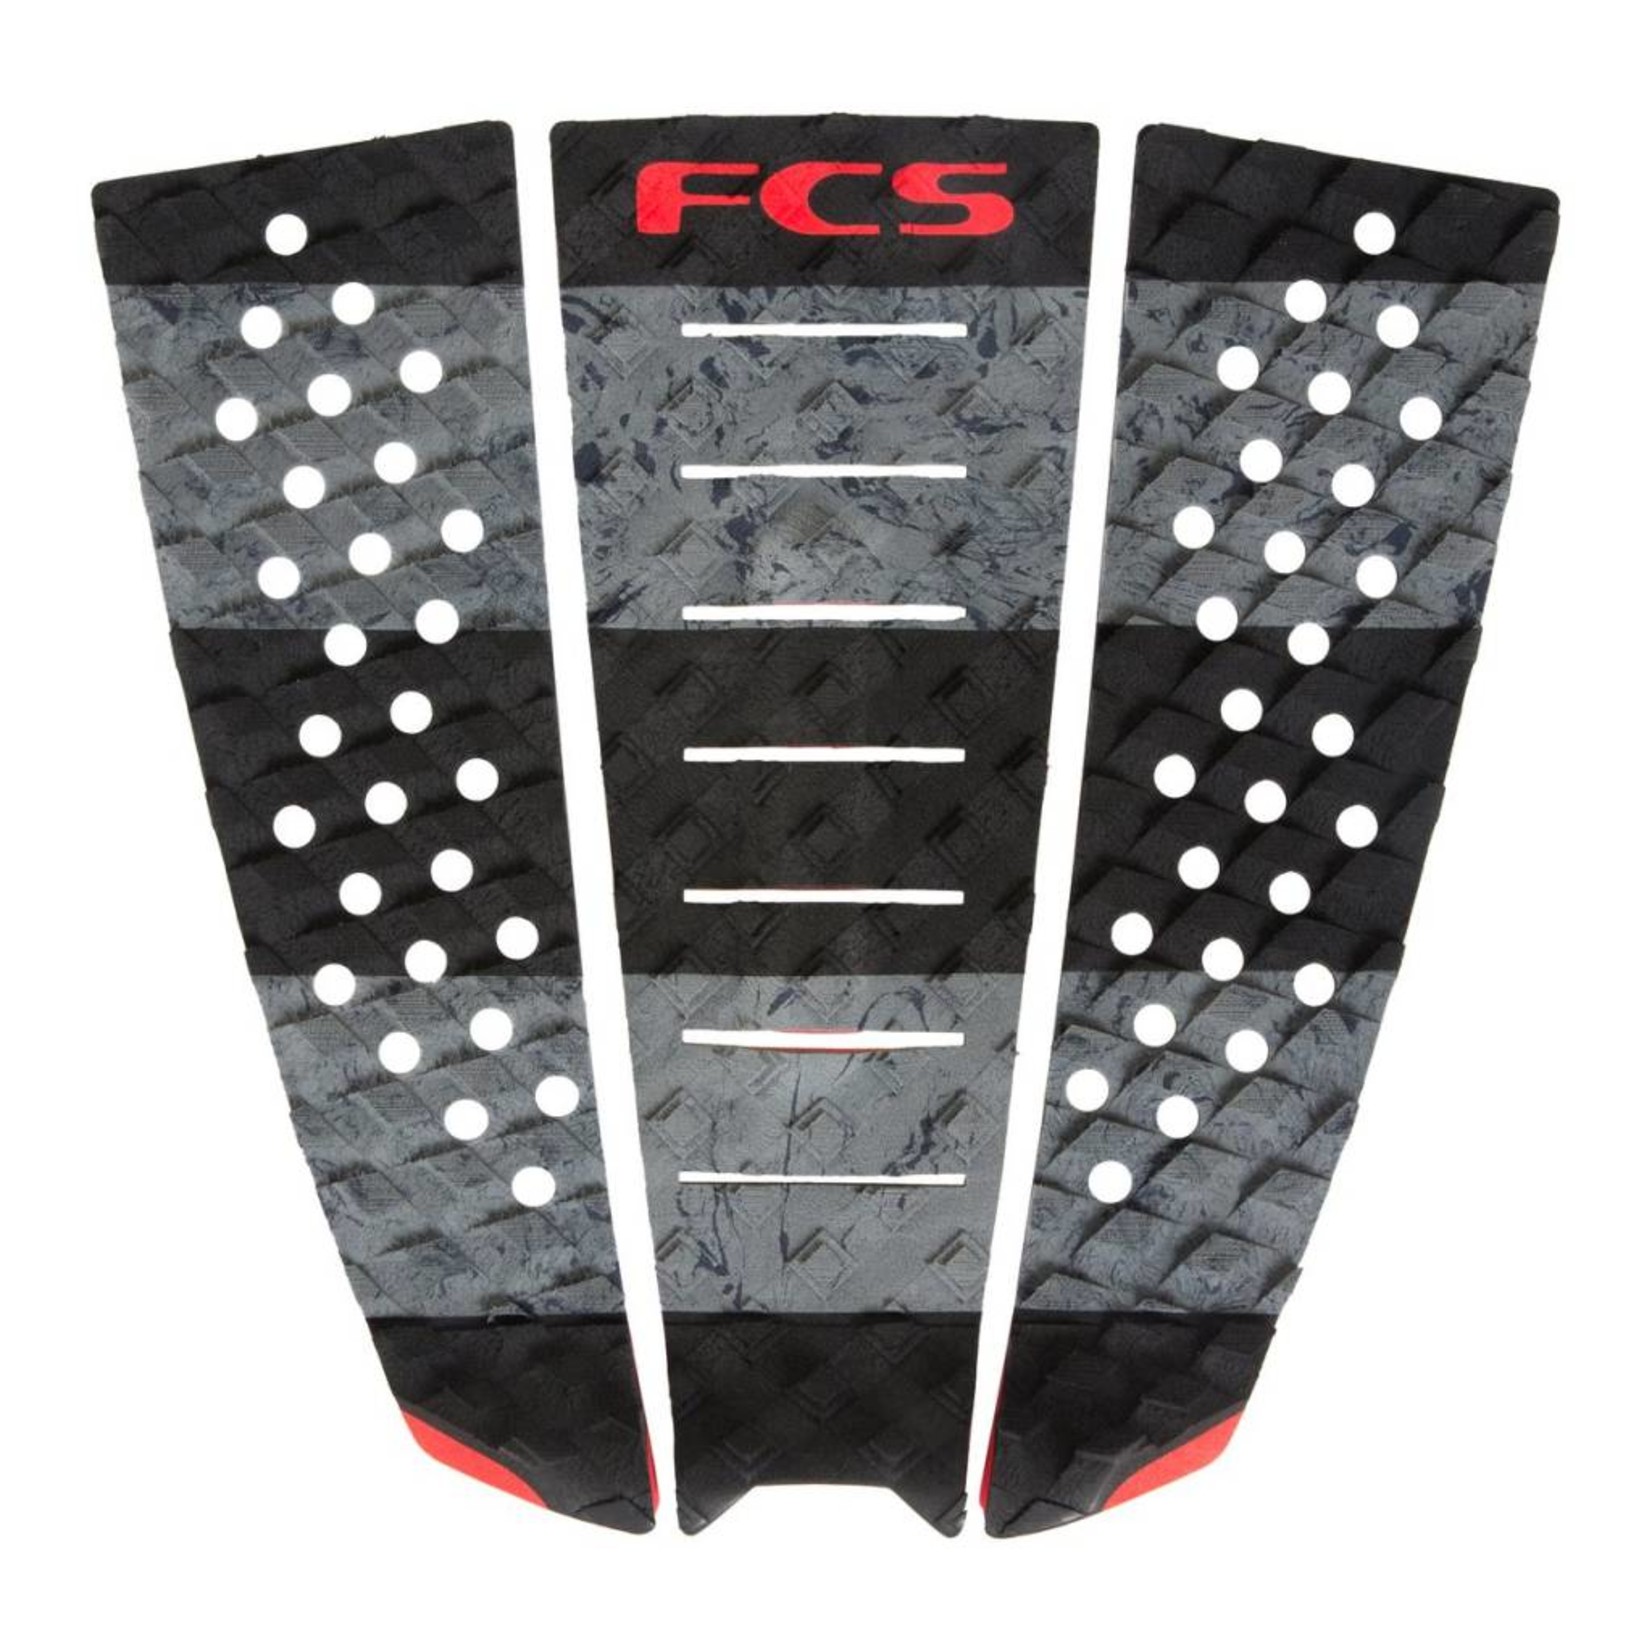 FCS FCS athlete tailpad